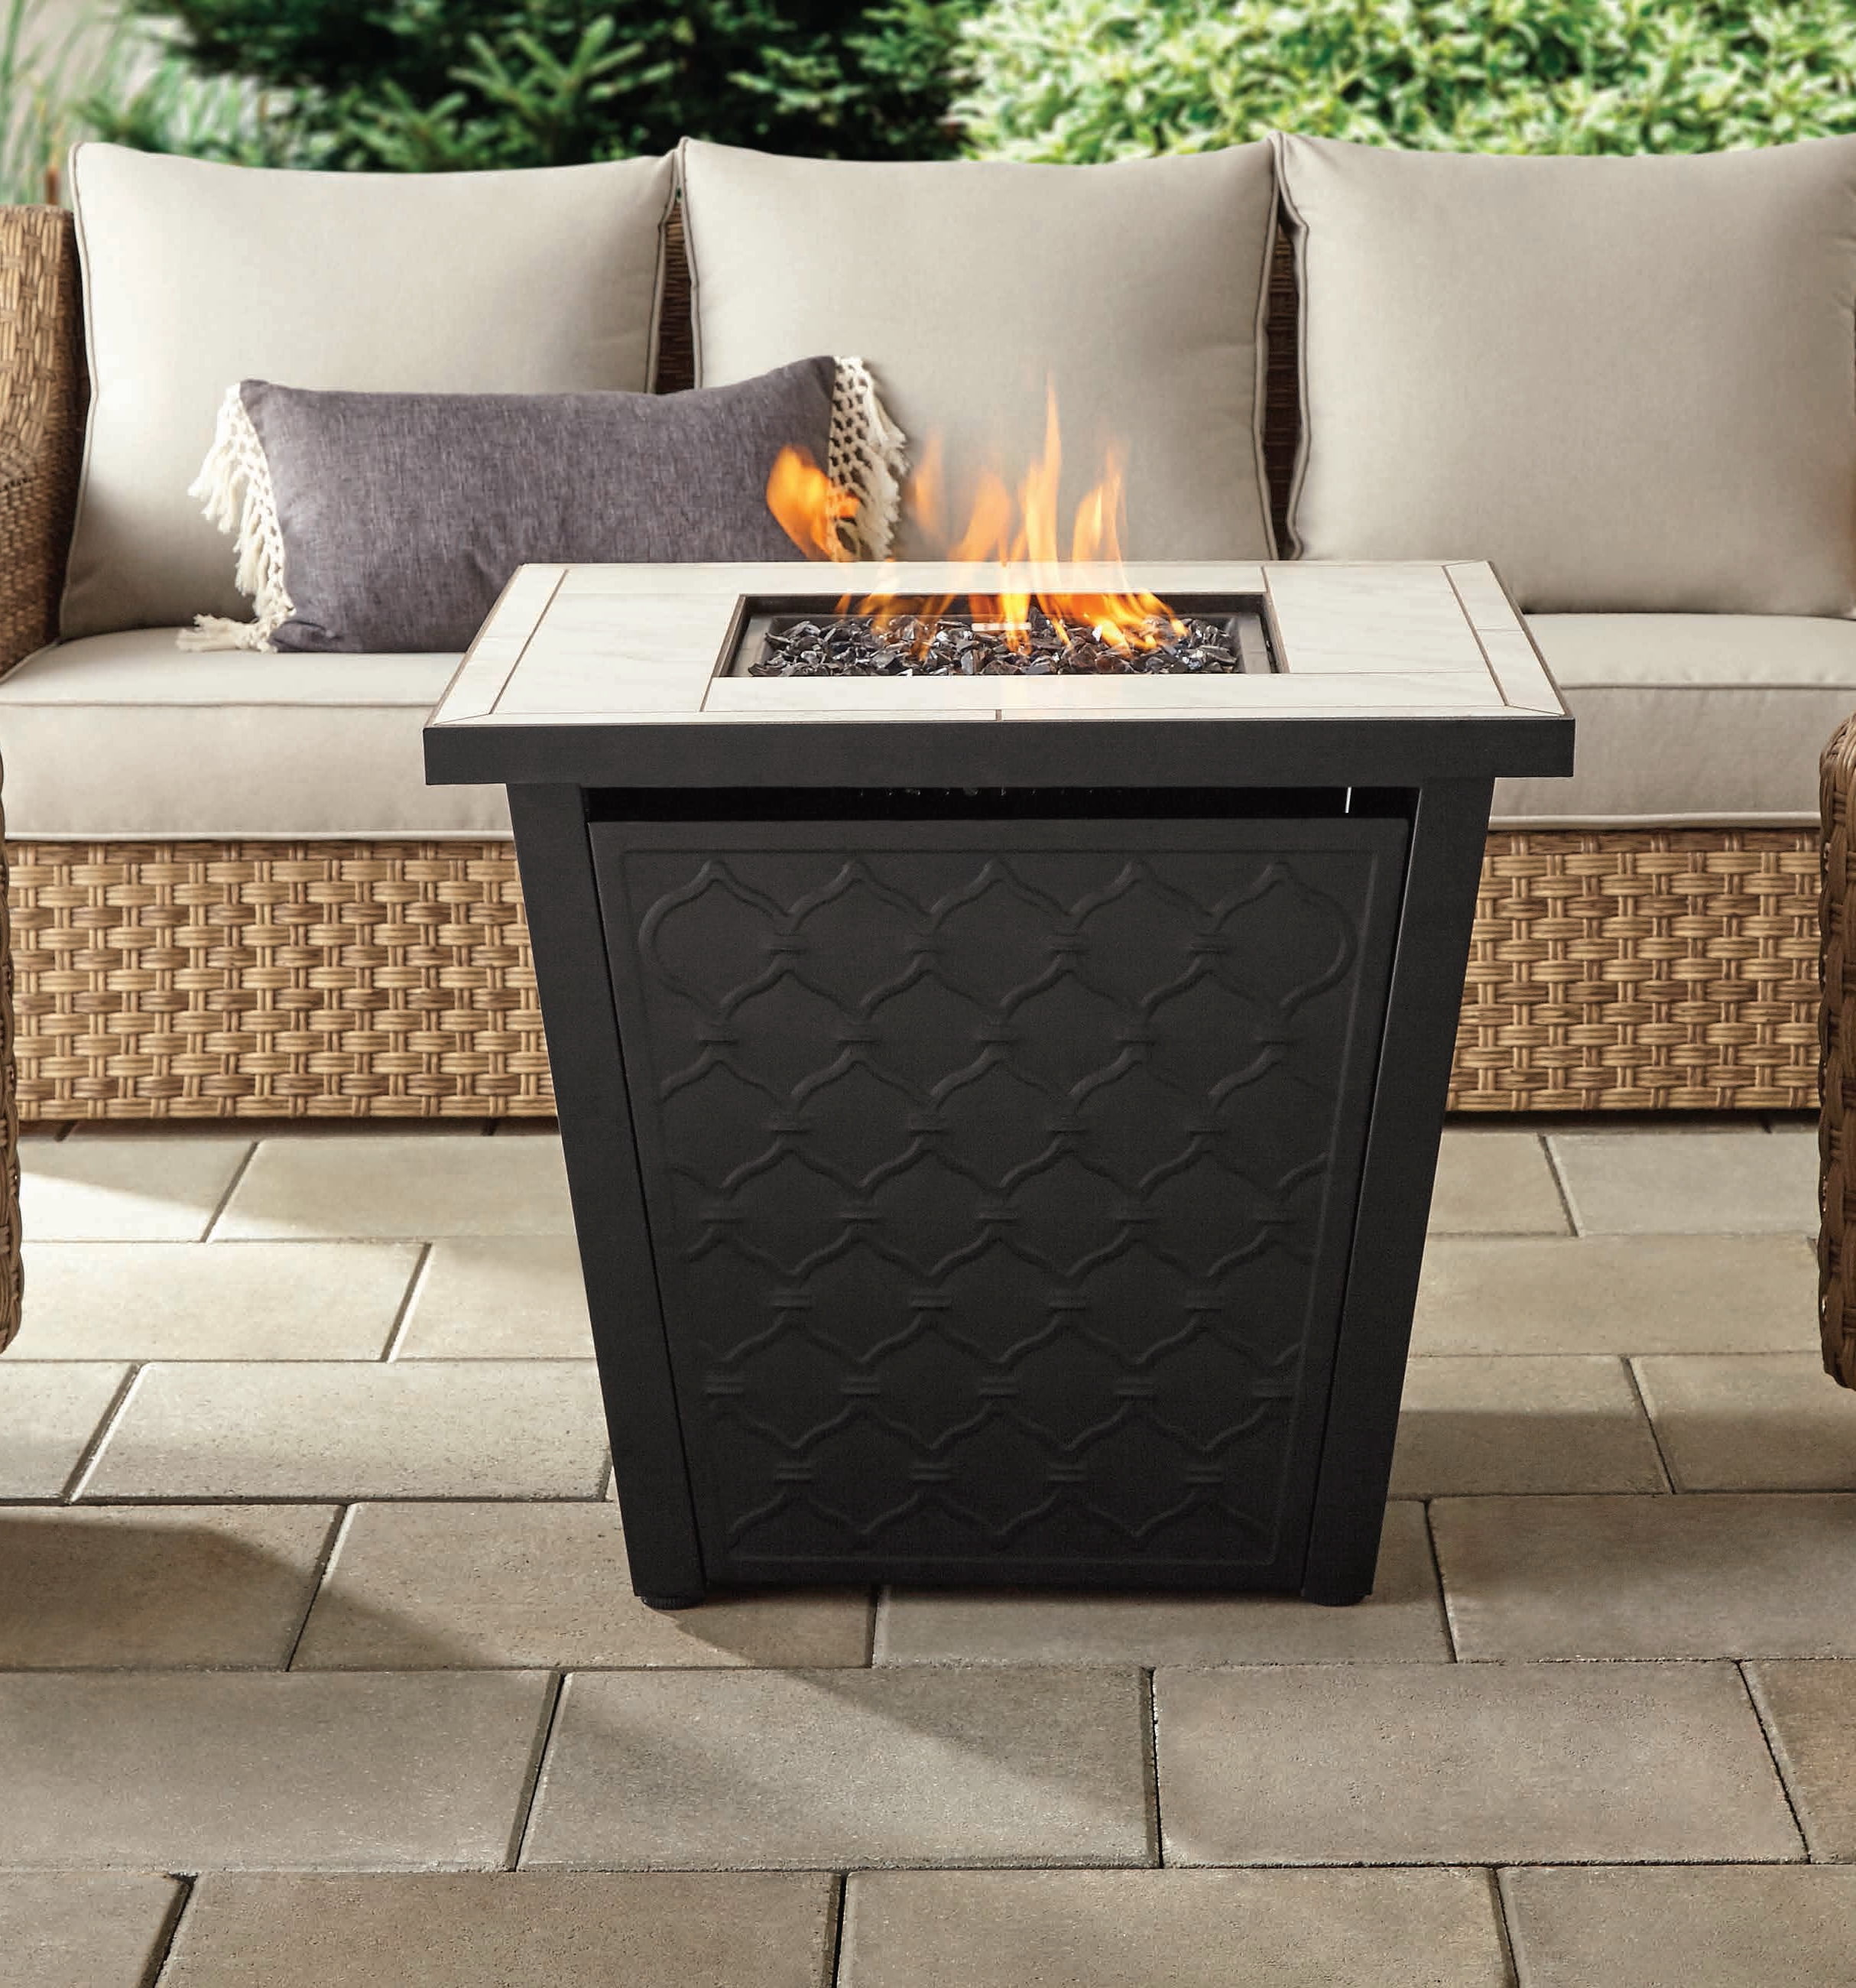 Square Lp Gas Ceramic Tile Fire Pit, Square Propane Fire Pit Table